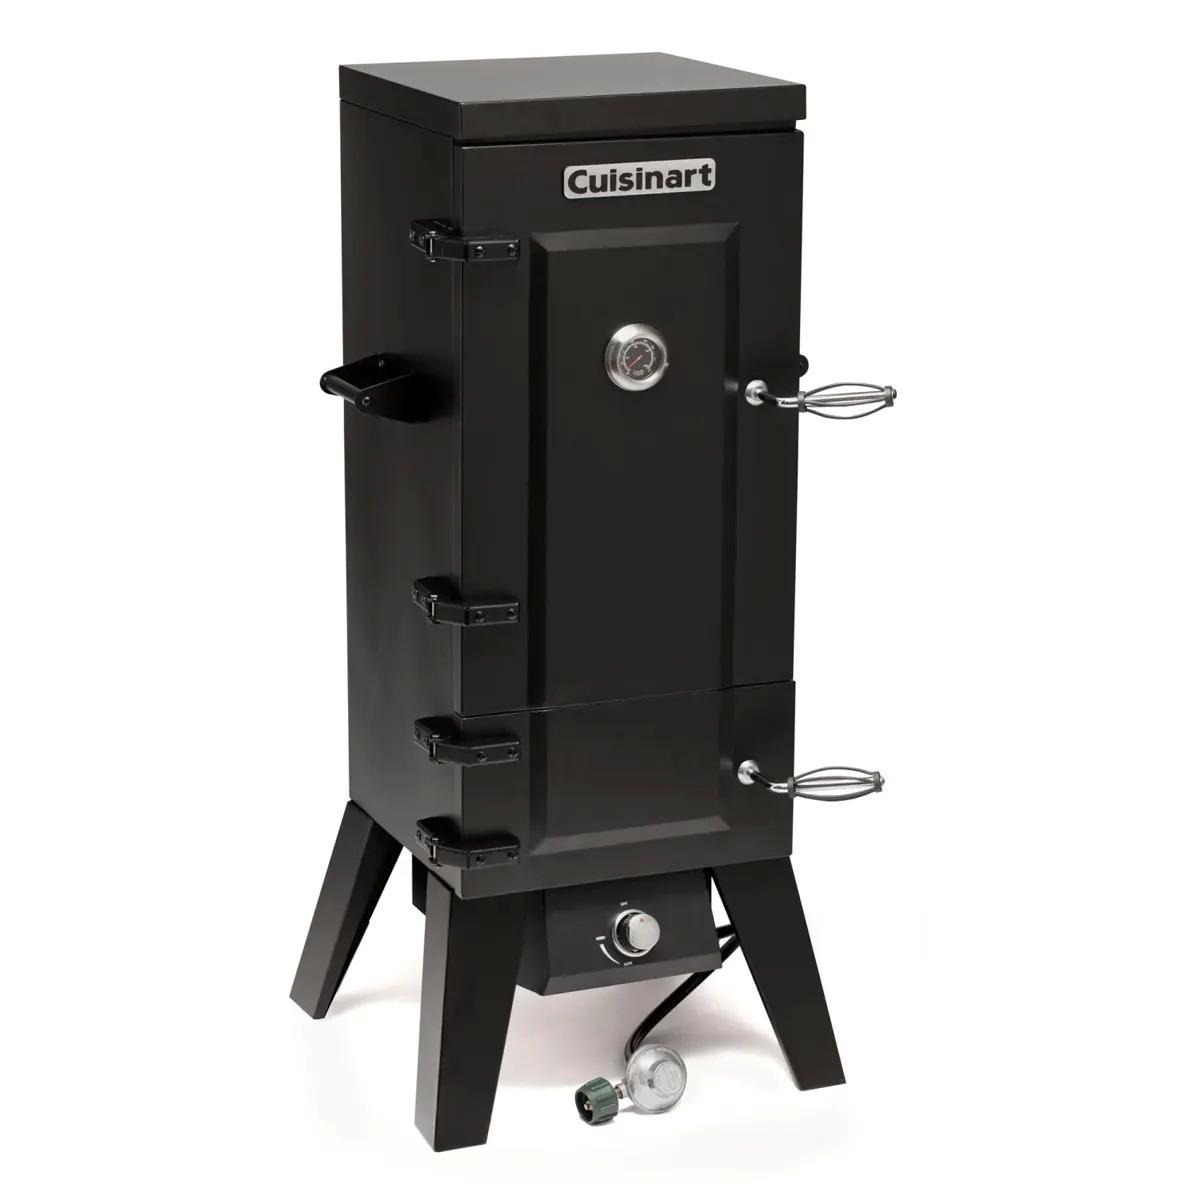 Cuisinart Vertical Propane Smoker COS-244 for $124.99 Shipped